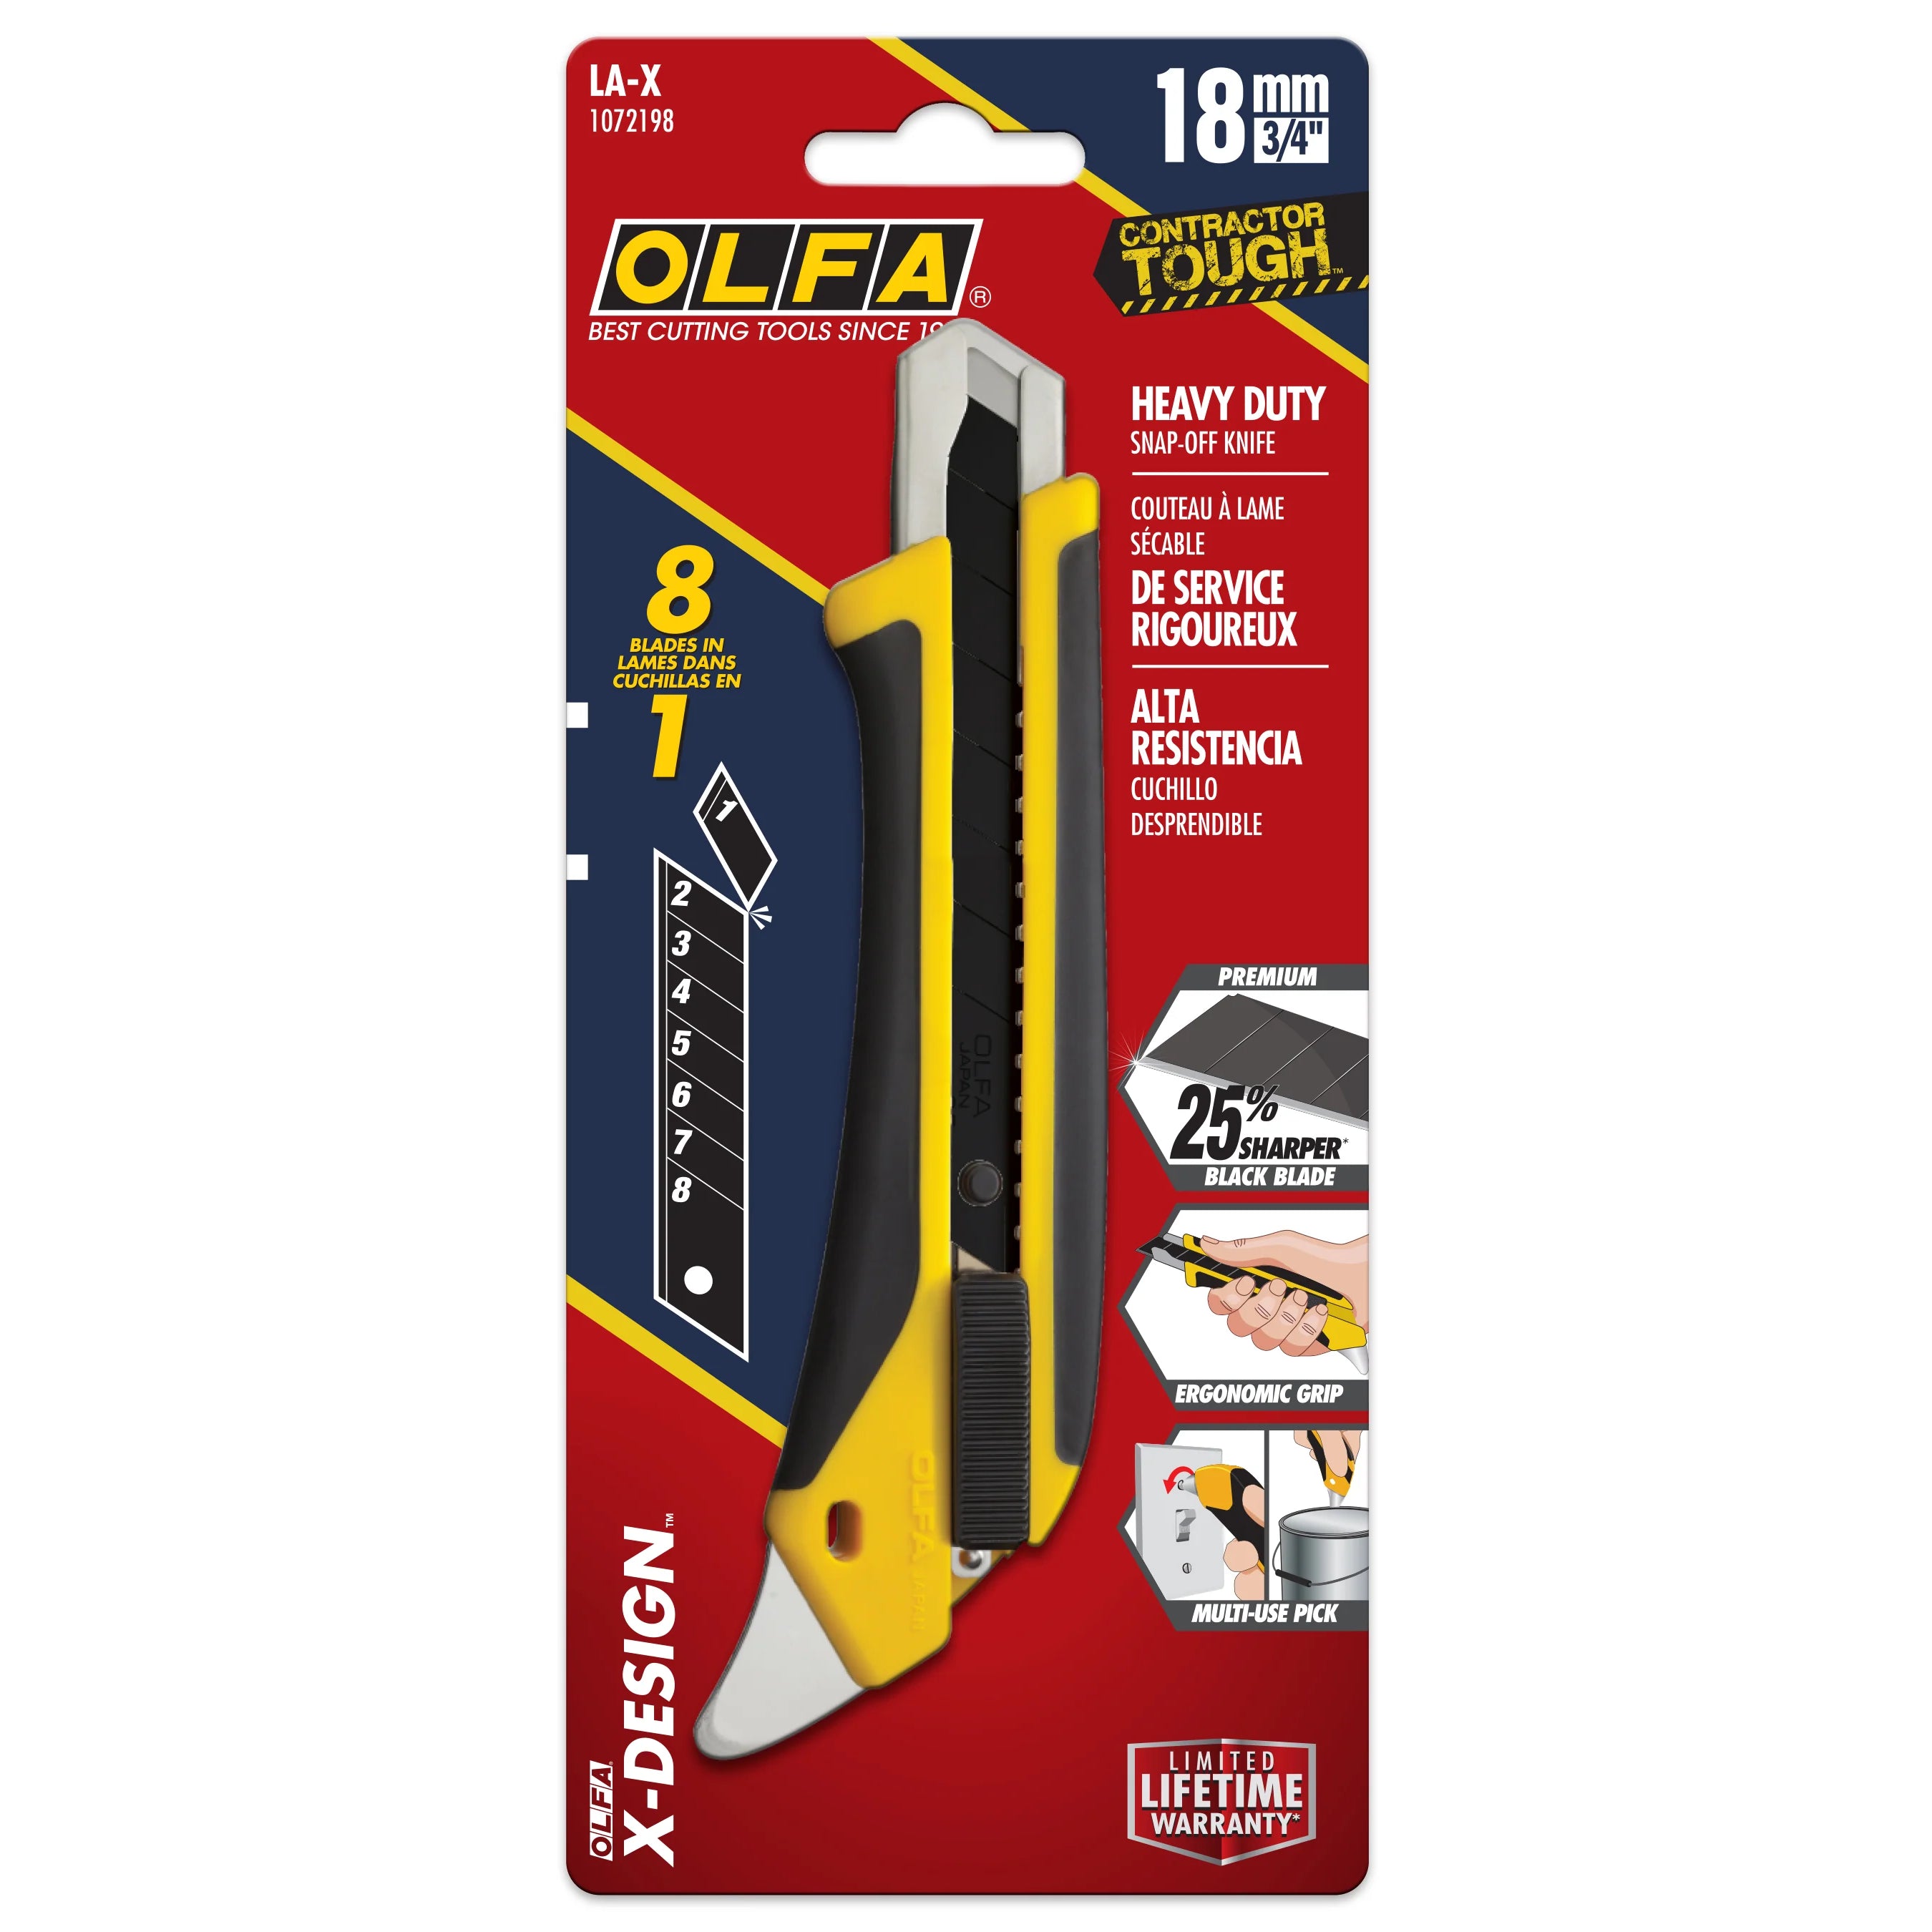 OLFA 18mm Heavy-Duty Auto-Lock UltraSharp Snap-Off Utility Knife 1072198 LA-X